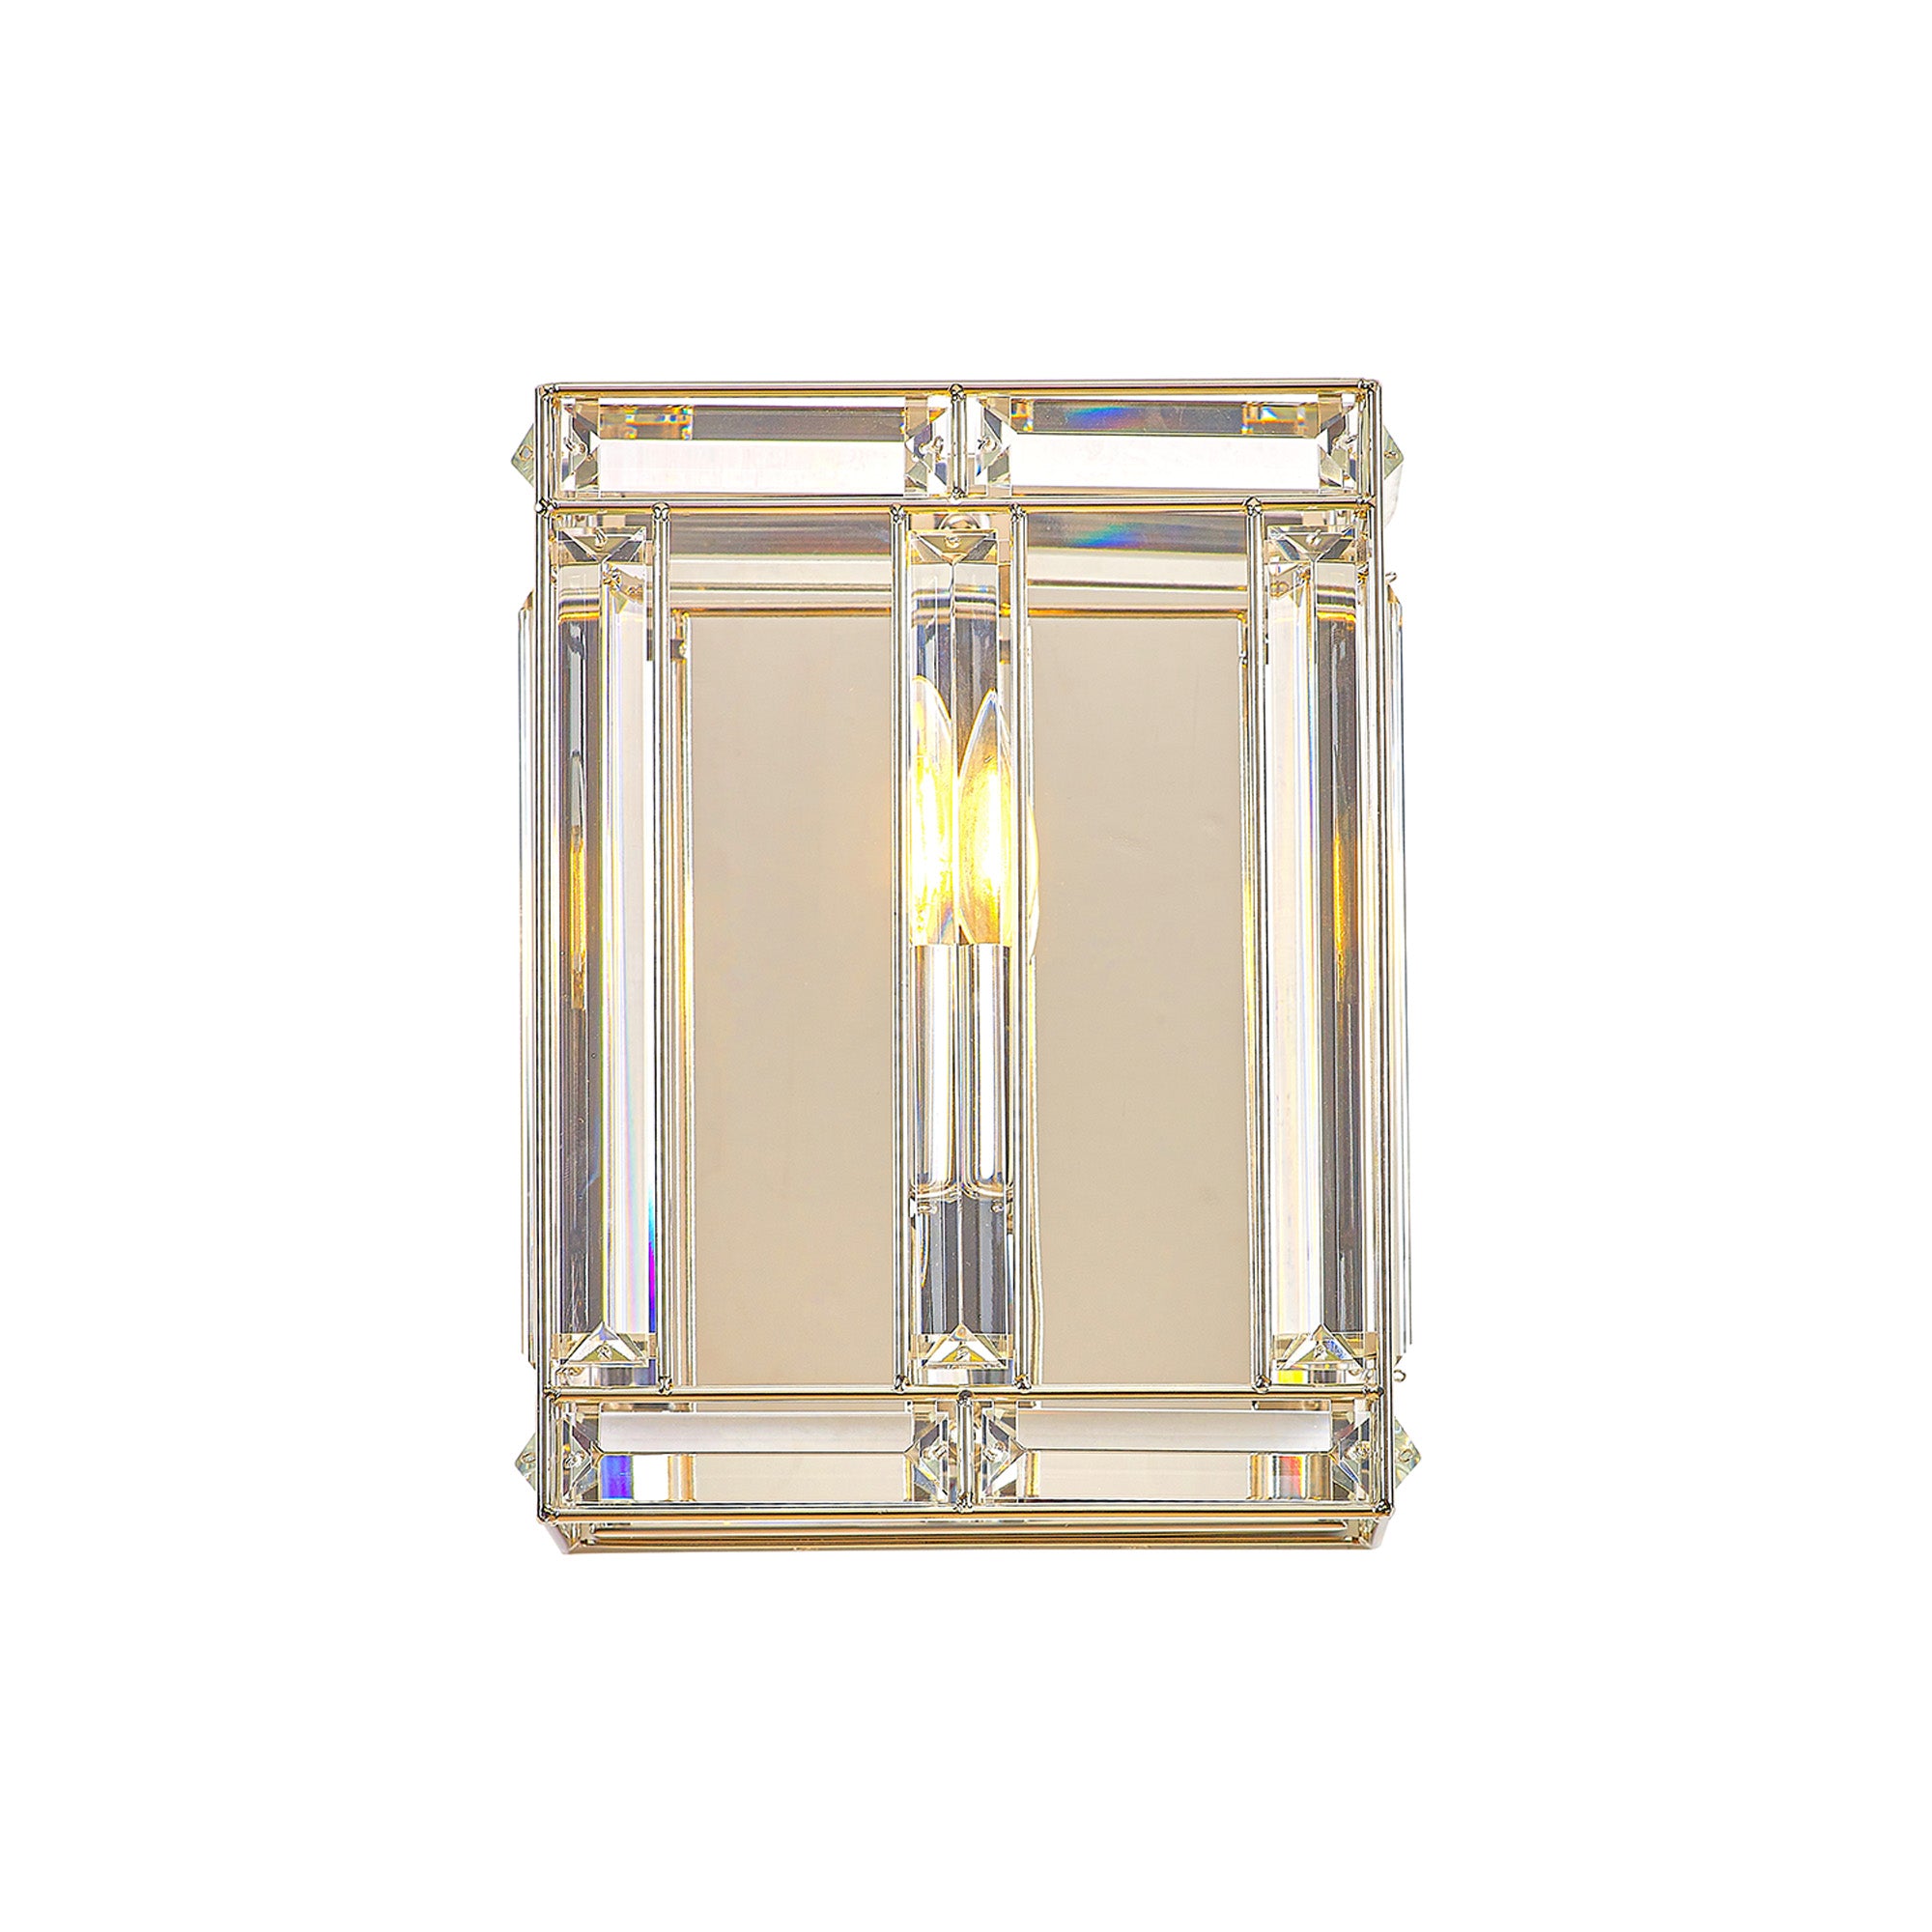 Hound Rectangular/Square Wall Light, 2 Light E14, Polished Nickel